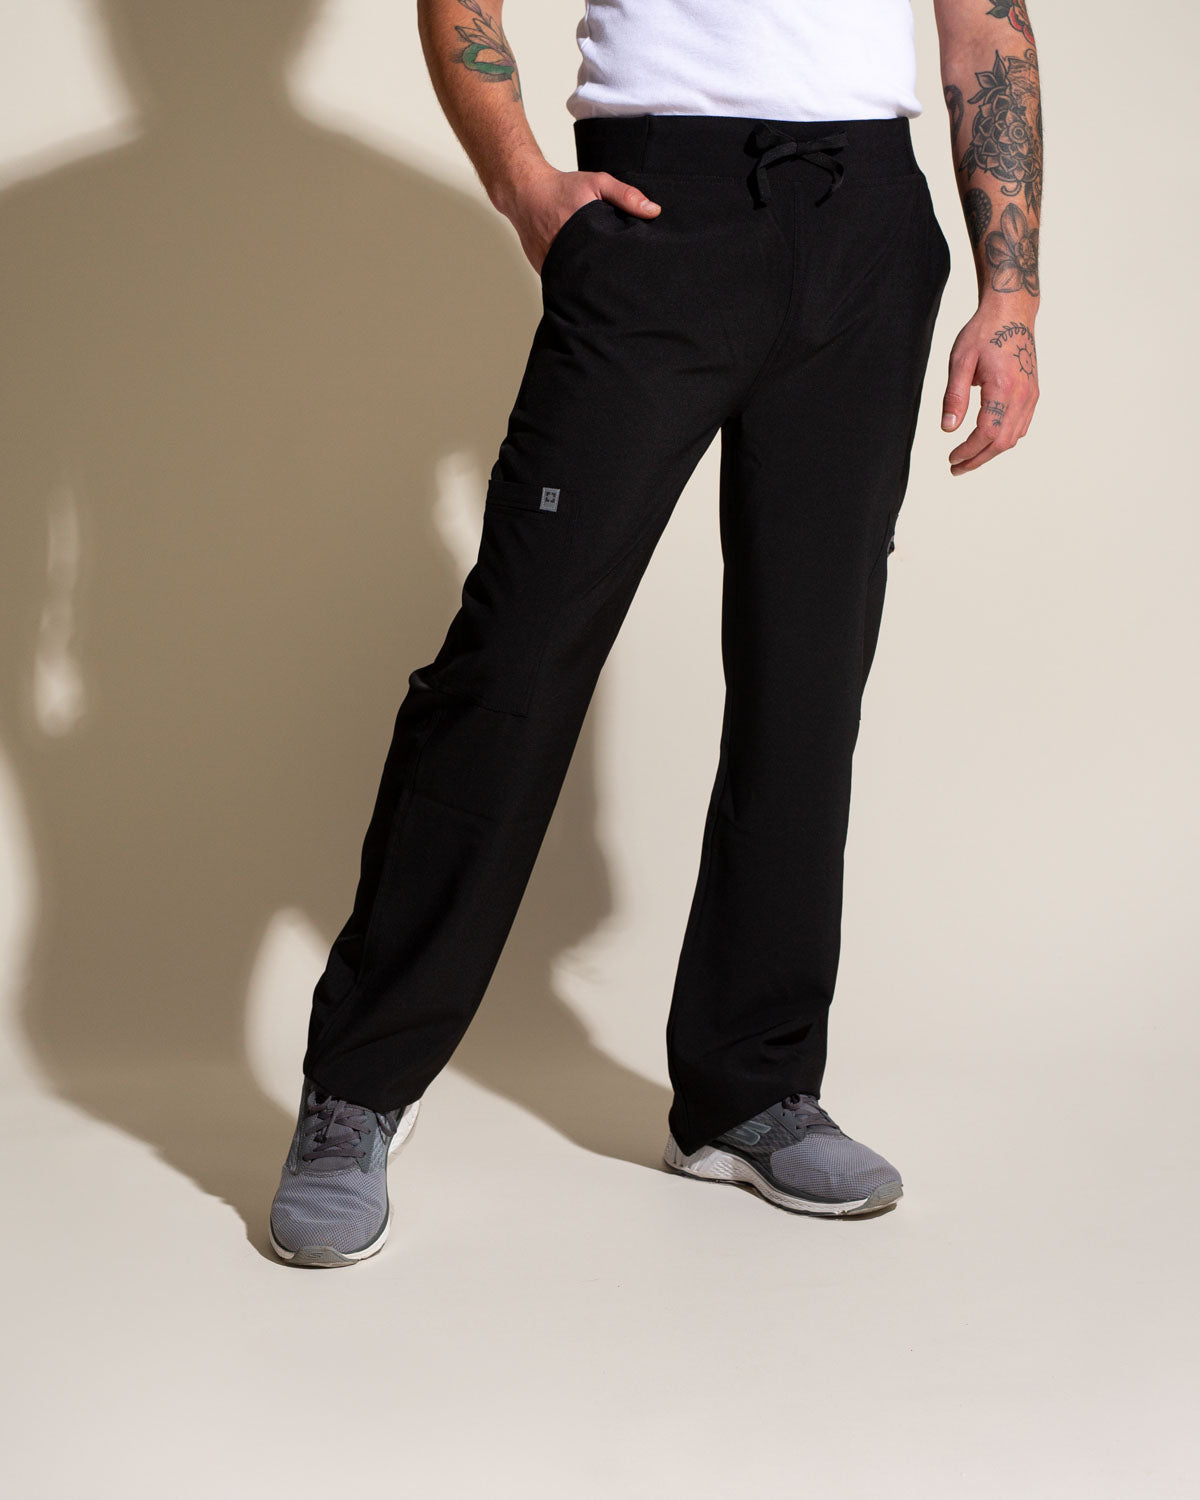 Pantalón Hombre - Uniformes Clínicos - Scorpi Sport Stretch